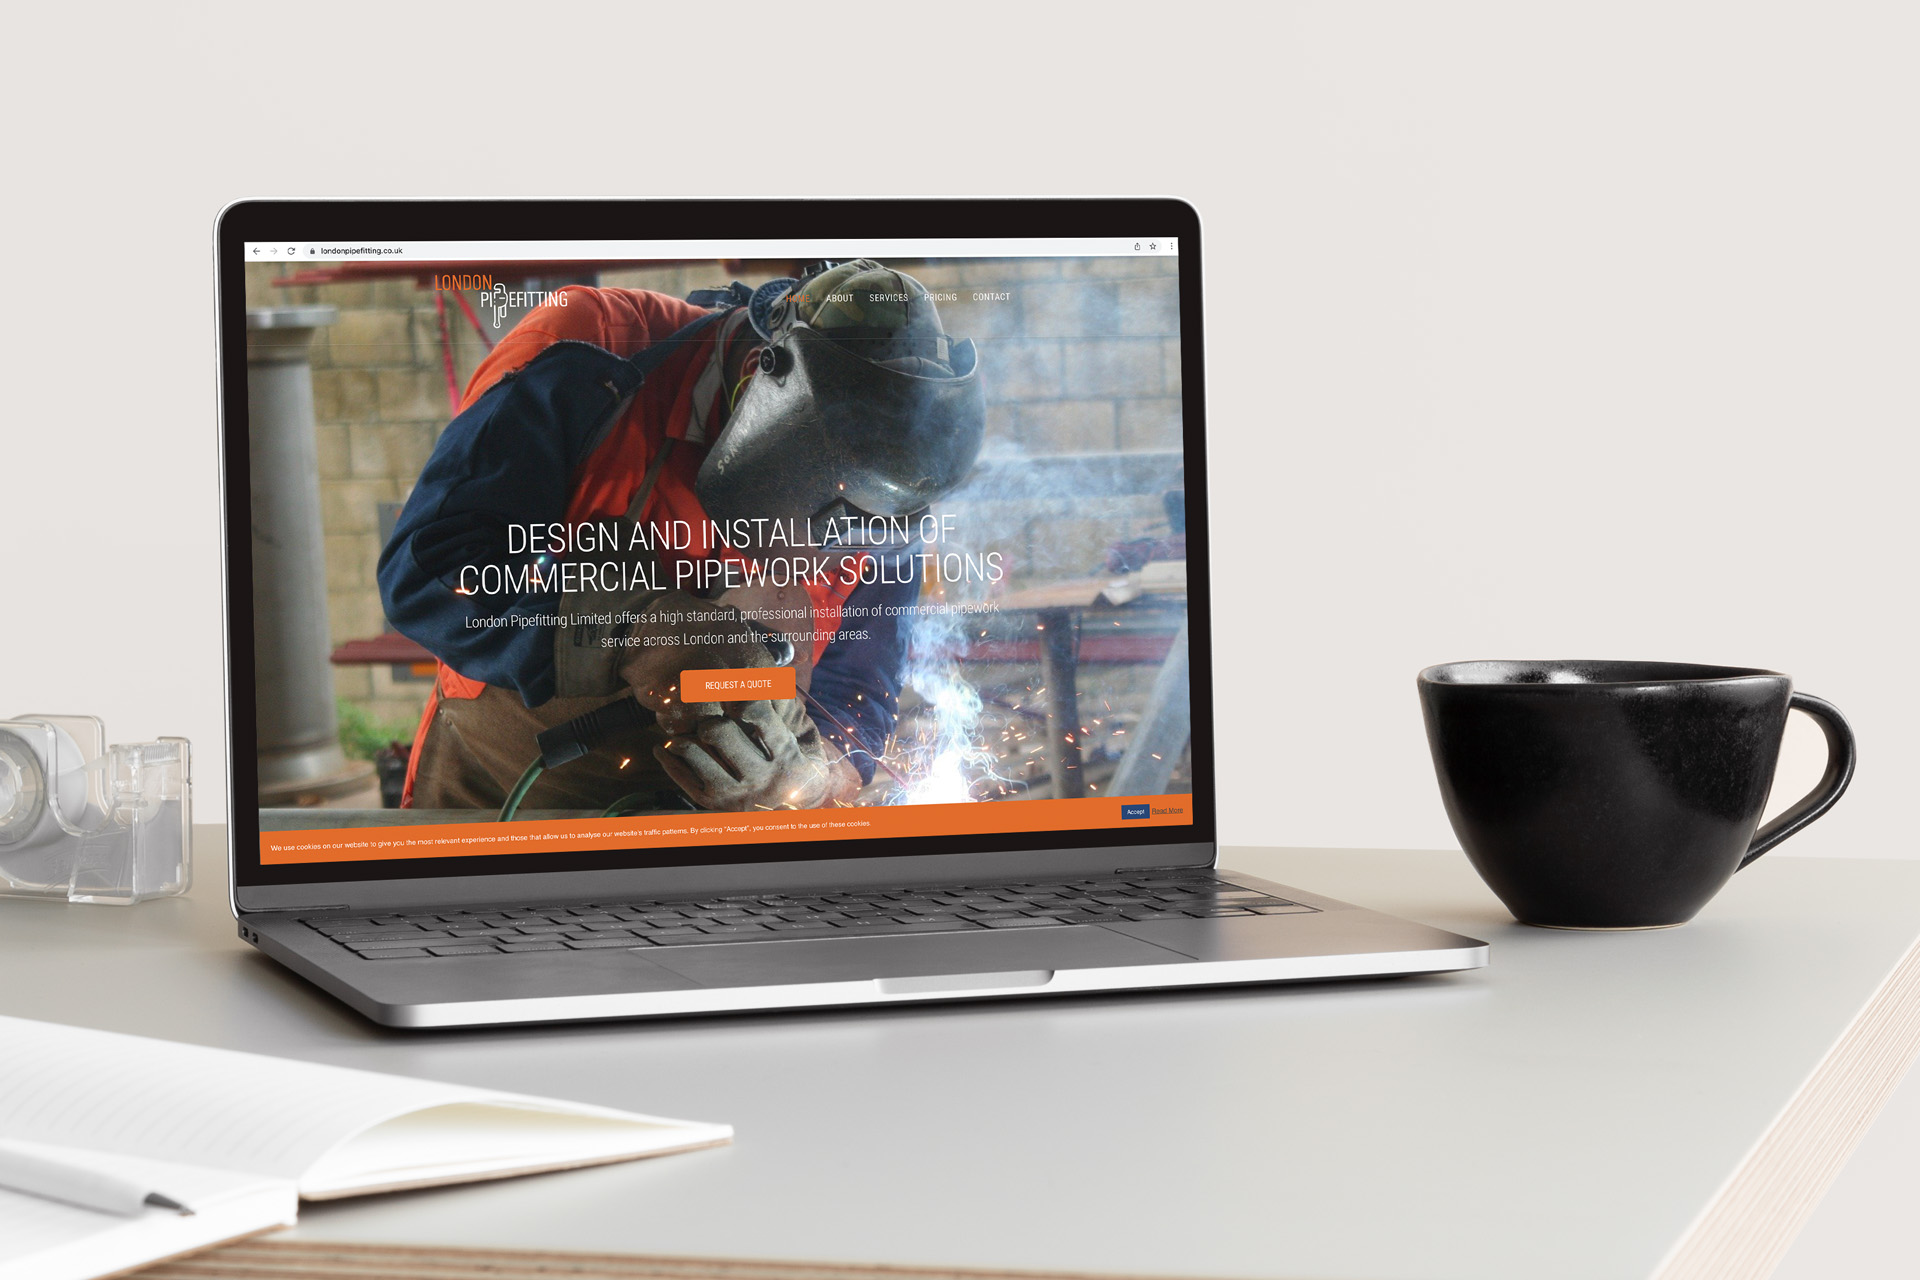 London Pipefitting website design on laptop